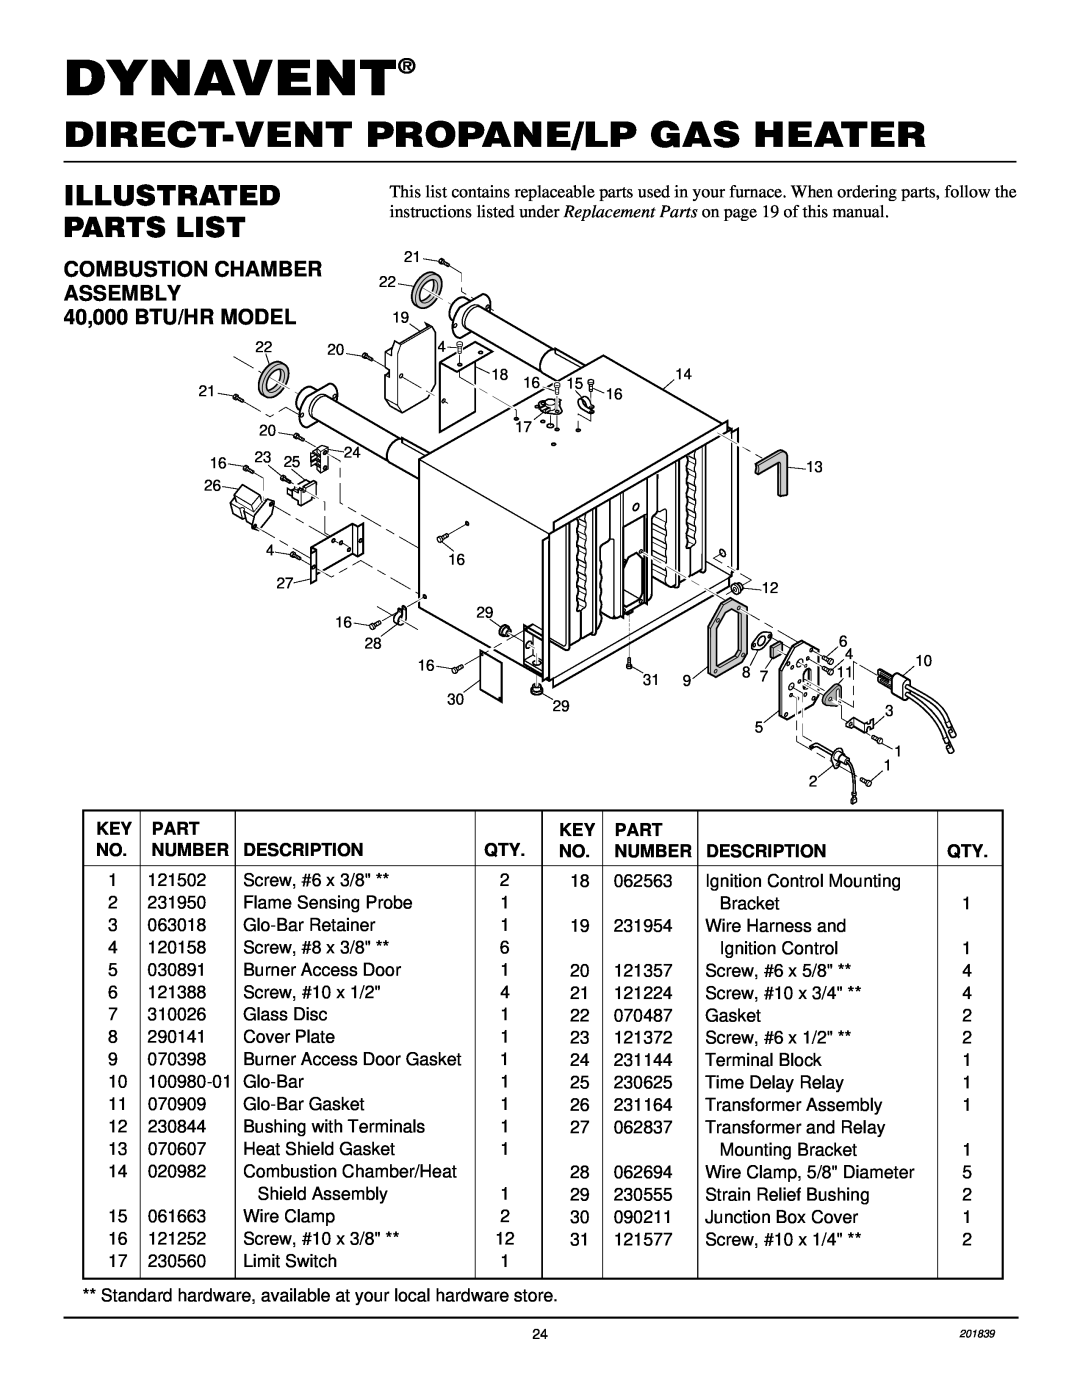 Desa DNV25PB, DNV40PB Dynavent, Direct-Ventpropane/Lp Gas Heater, Illustrated Parts List, Combustion Chamber, Assembly 